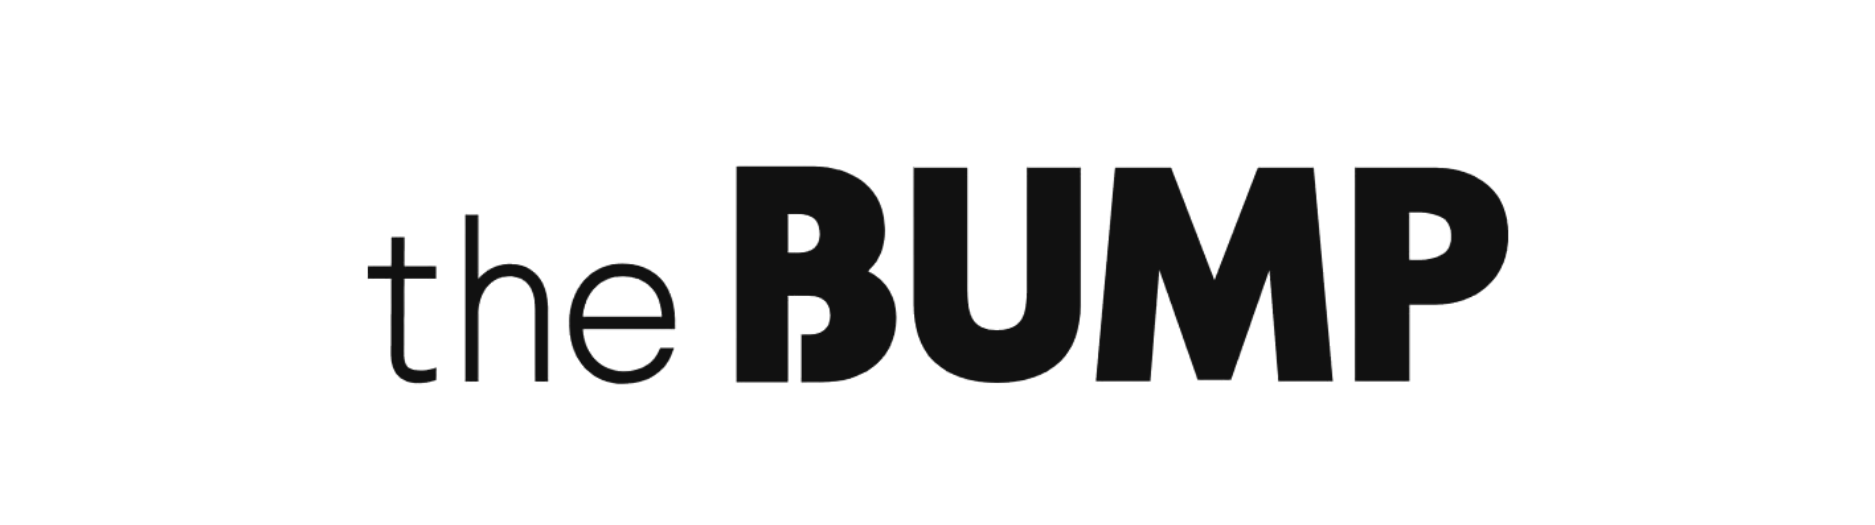 the_bump